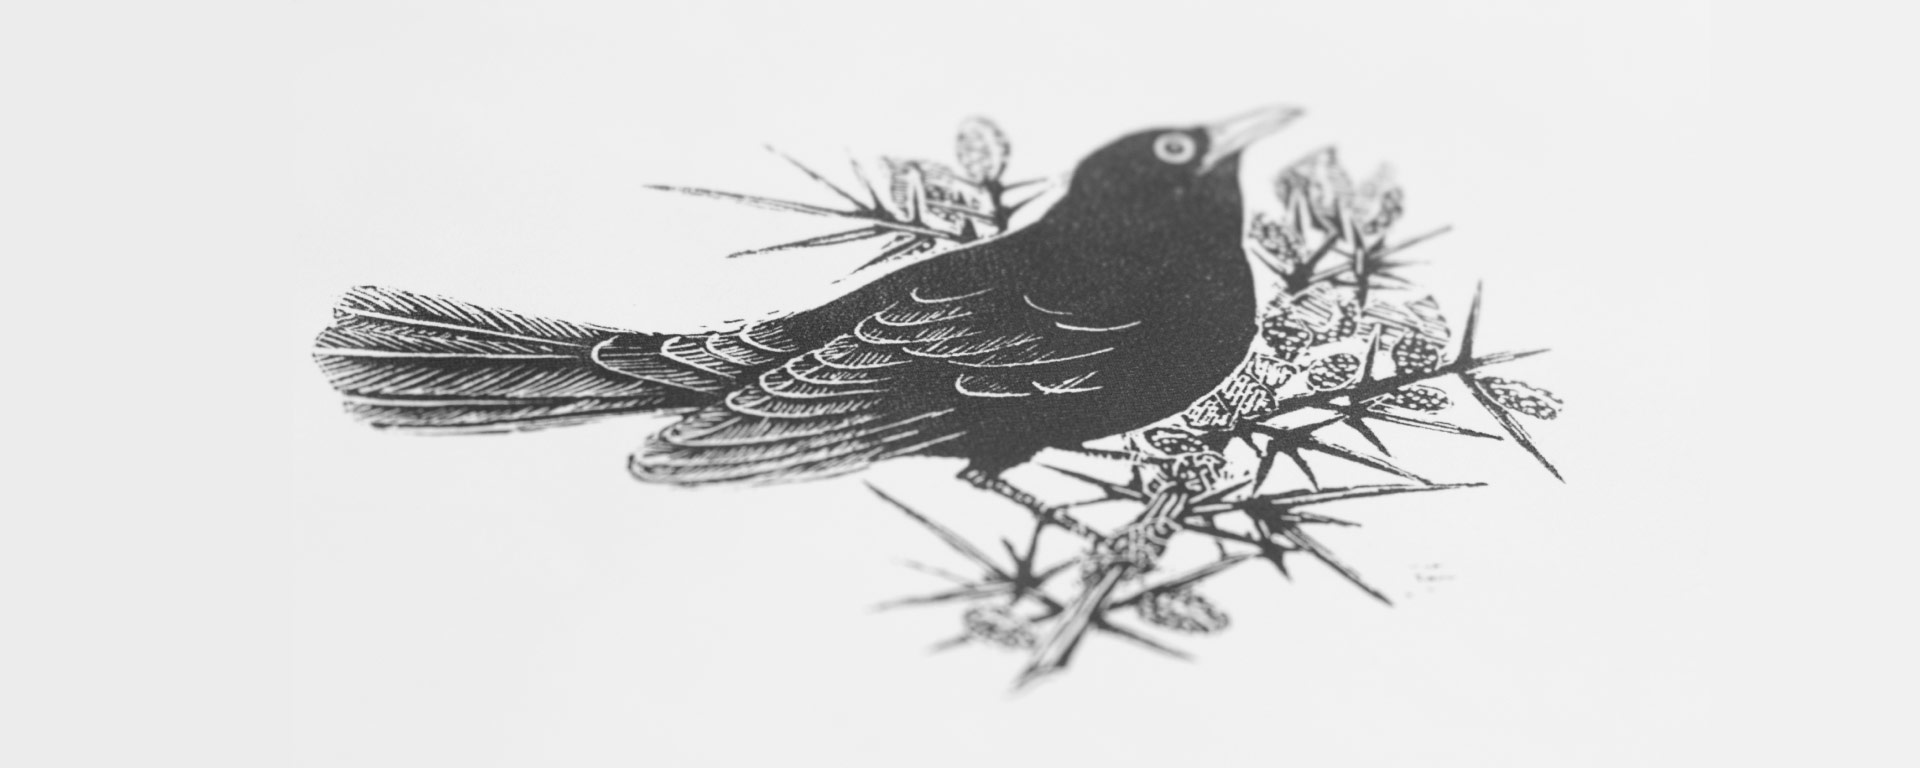 The Blackbird of Belfast Lough, wood engraving by Jeffrey Morgan